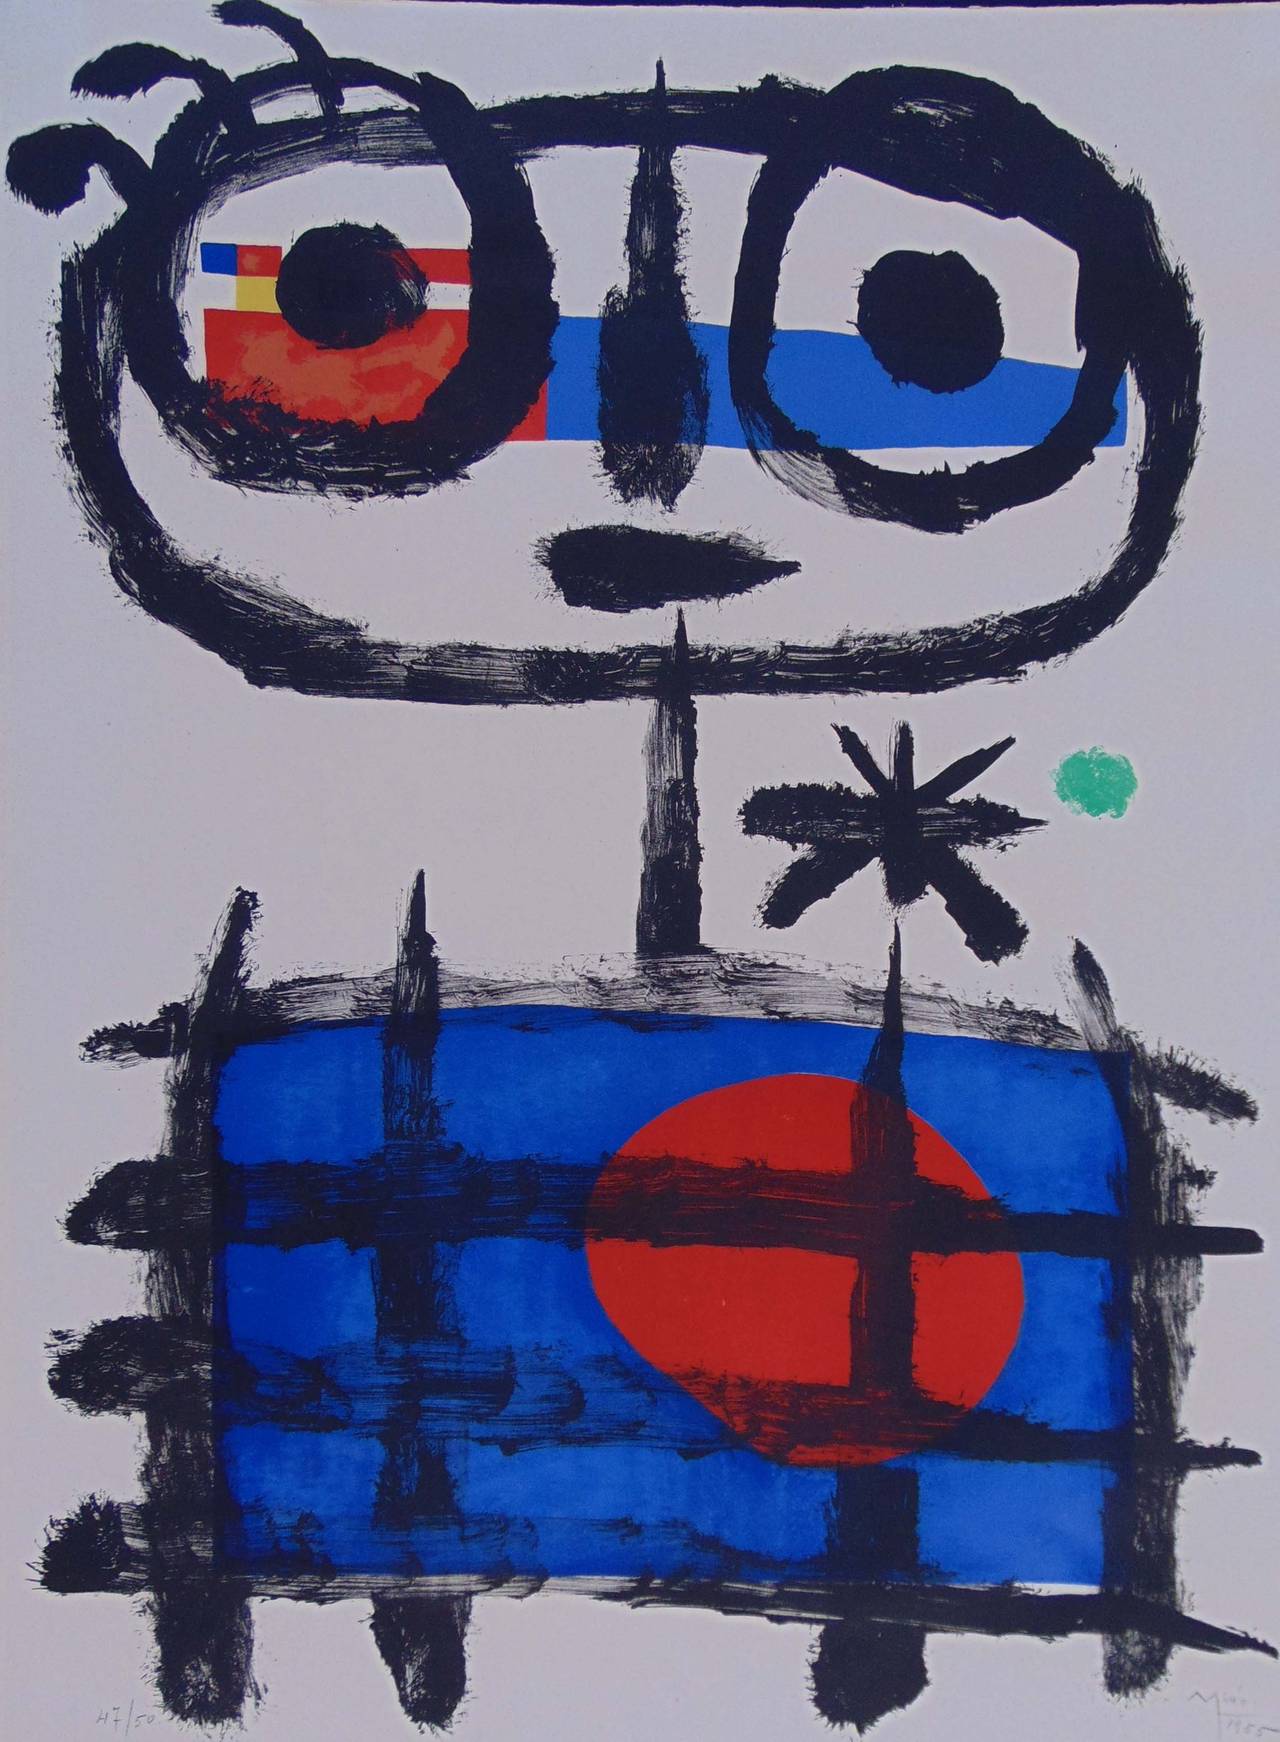 Joan Miró - Sun Eater / Mangeur de Soleil, Print For Sale at 1stdibs